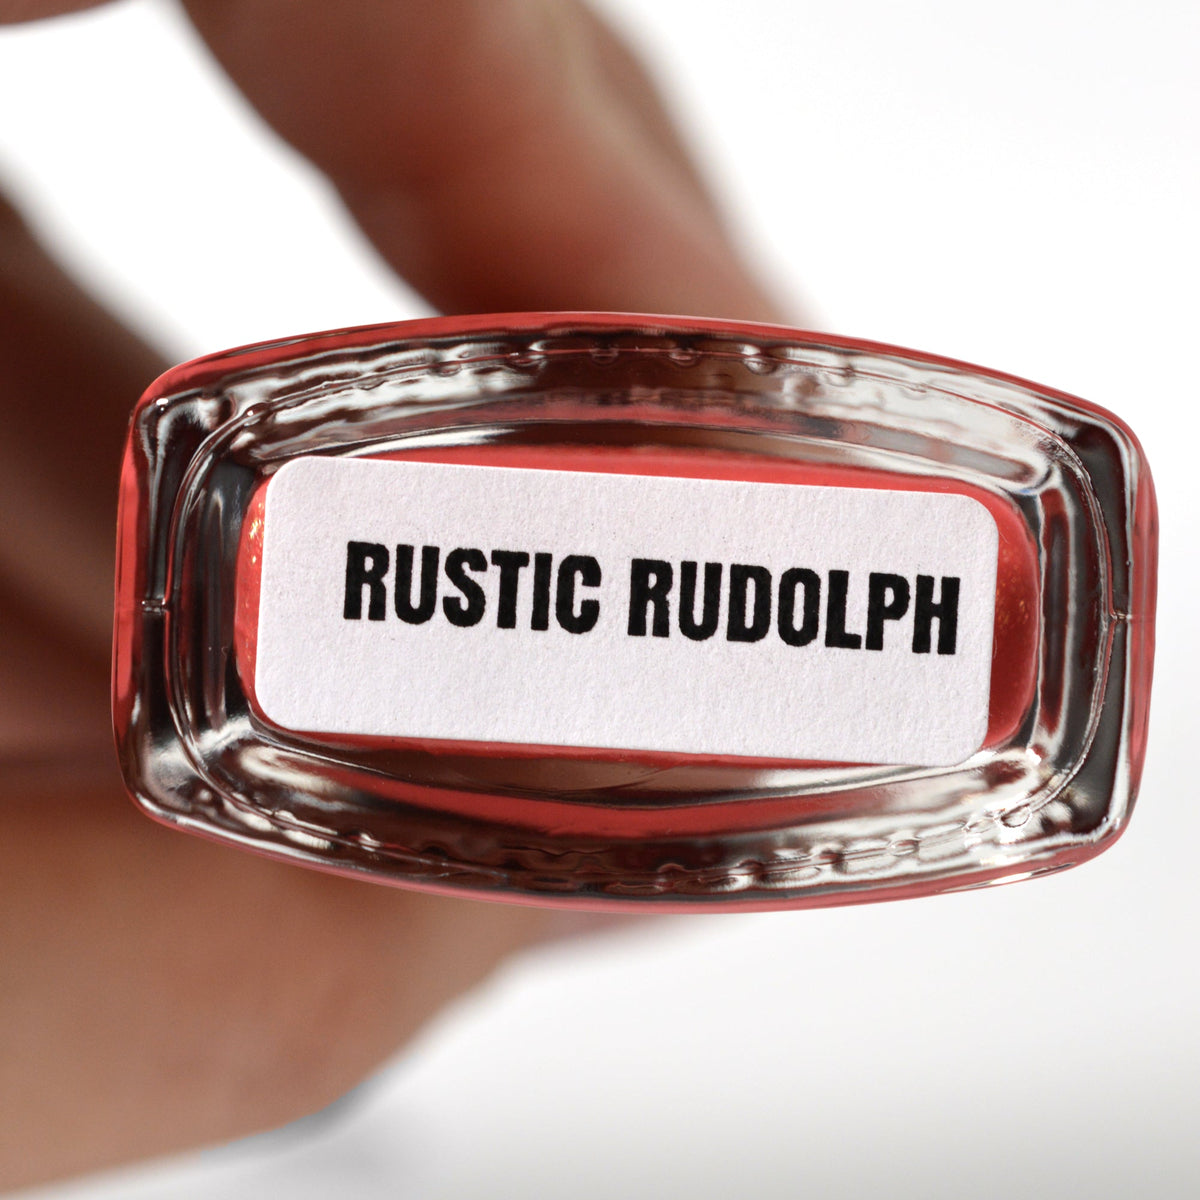 Rustic Rudolph - Nail Polish - BLUSH